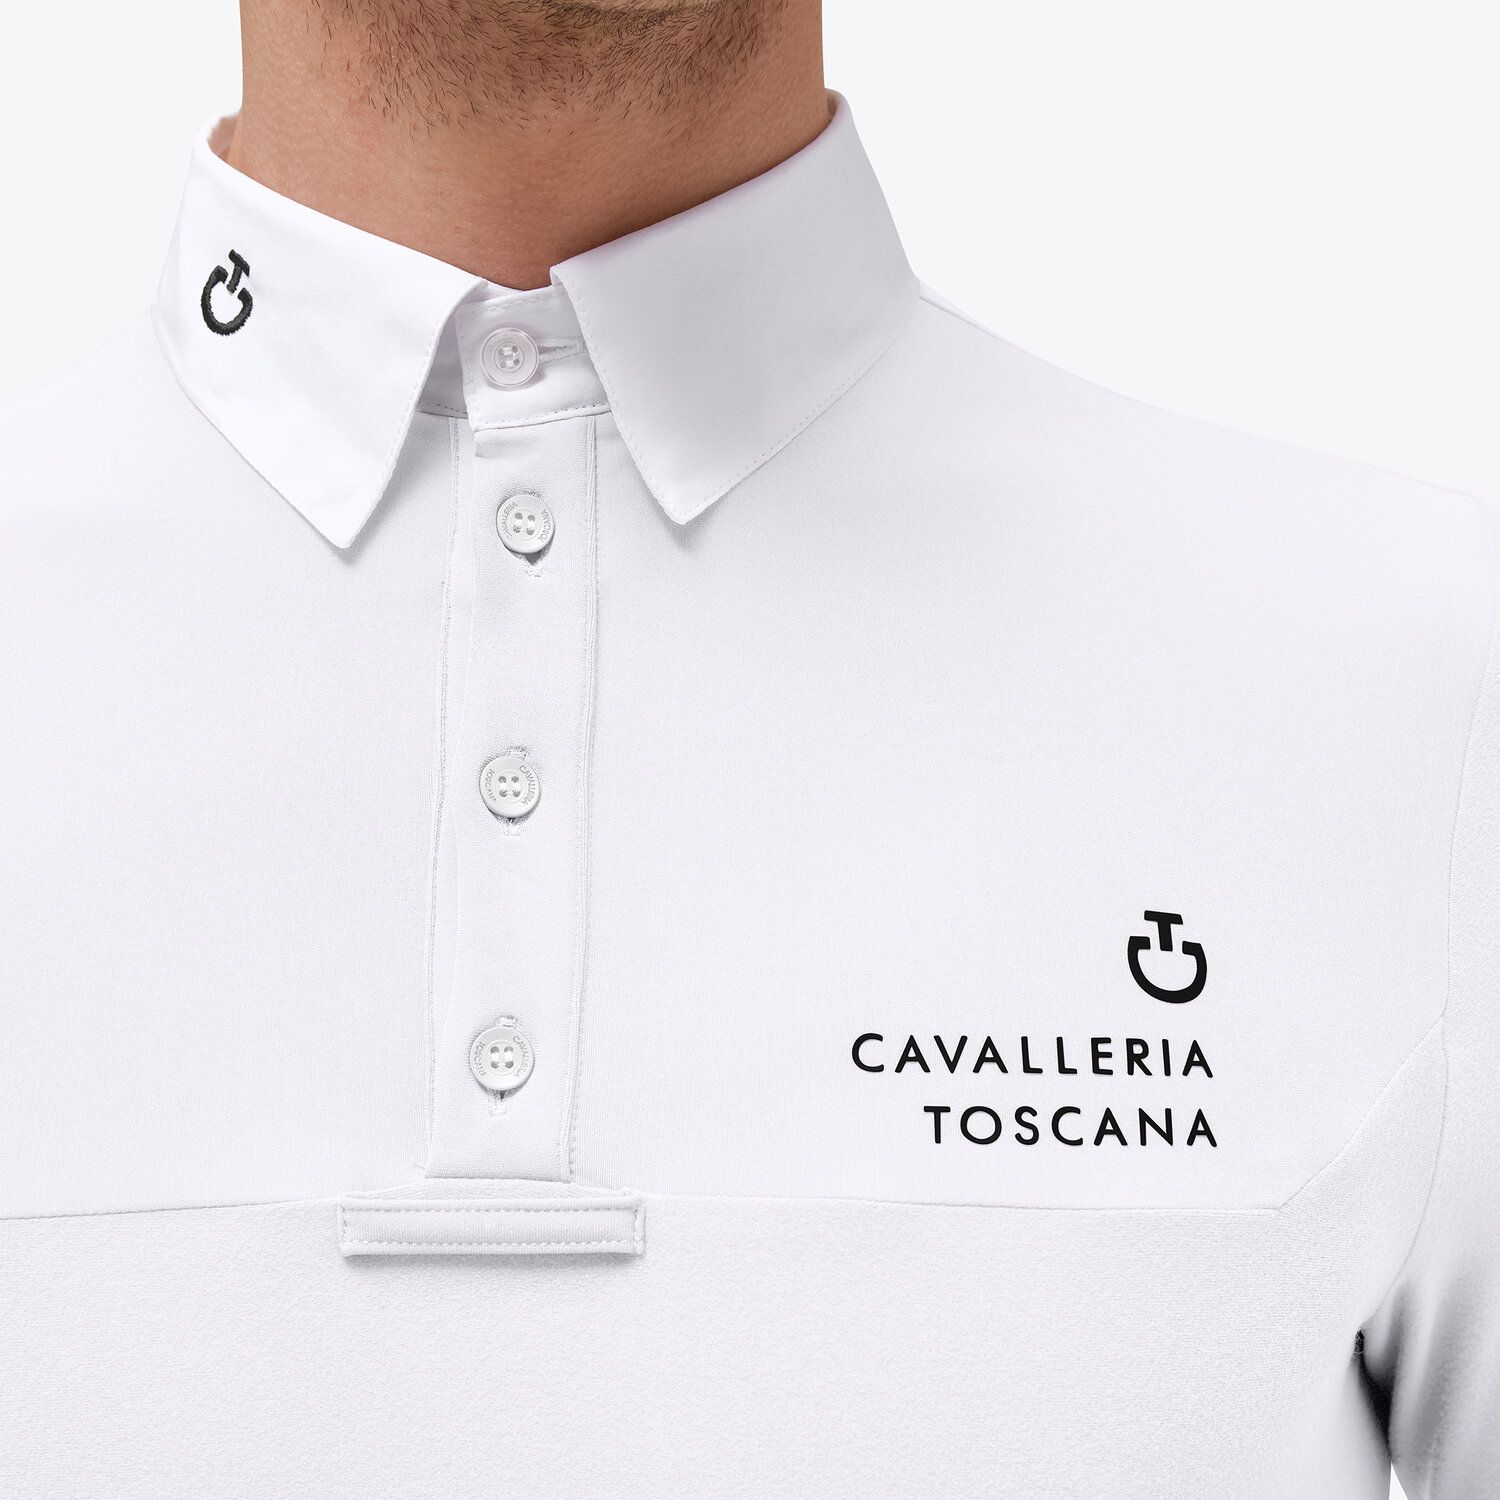 Cavalleria Toscana Men's competition polo shirt WHITE-3